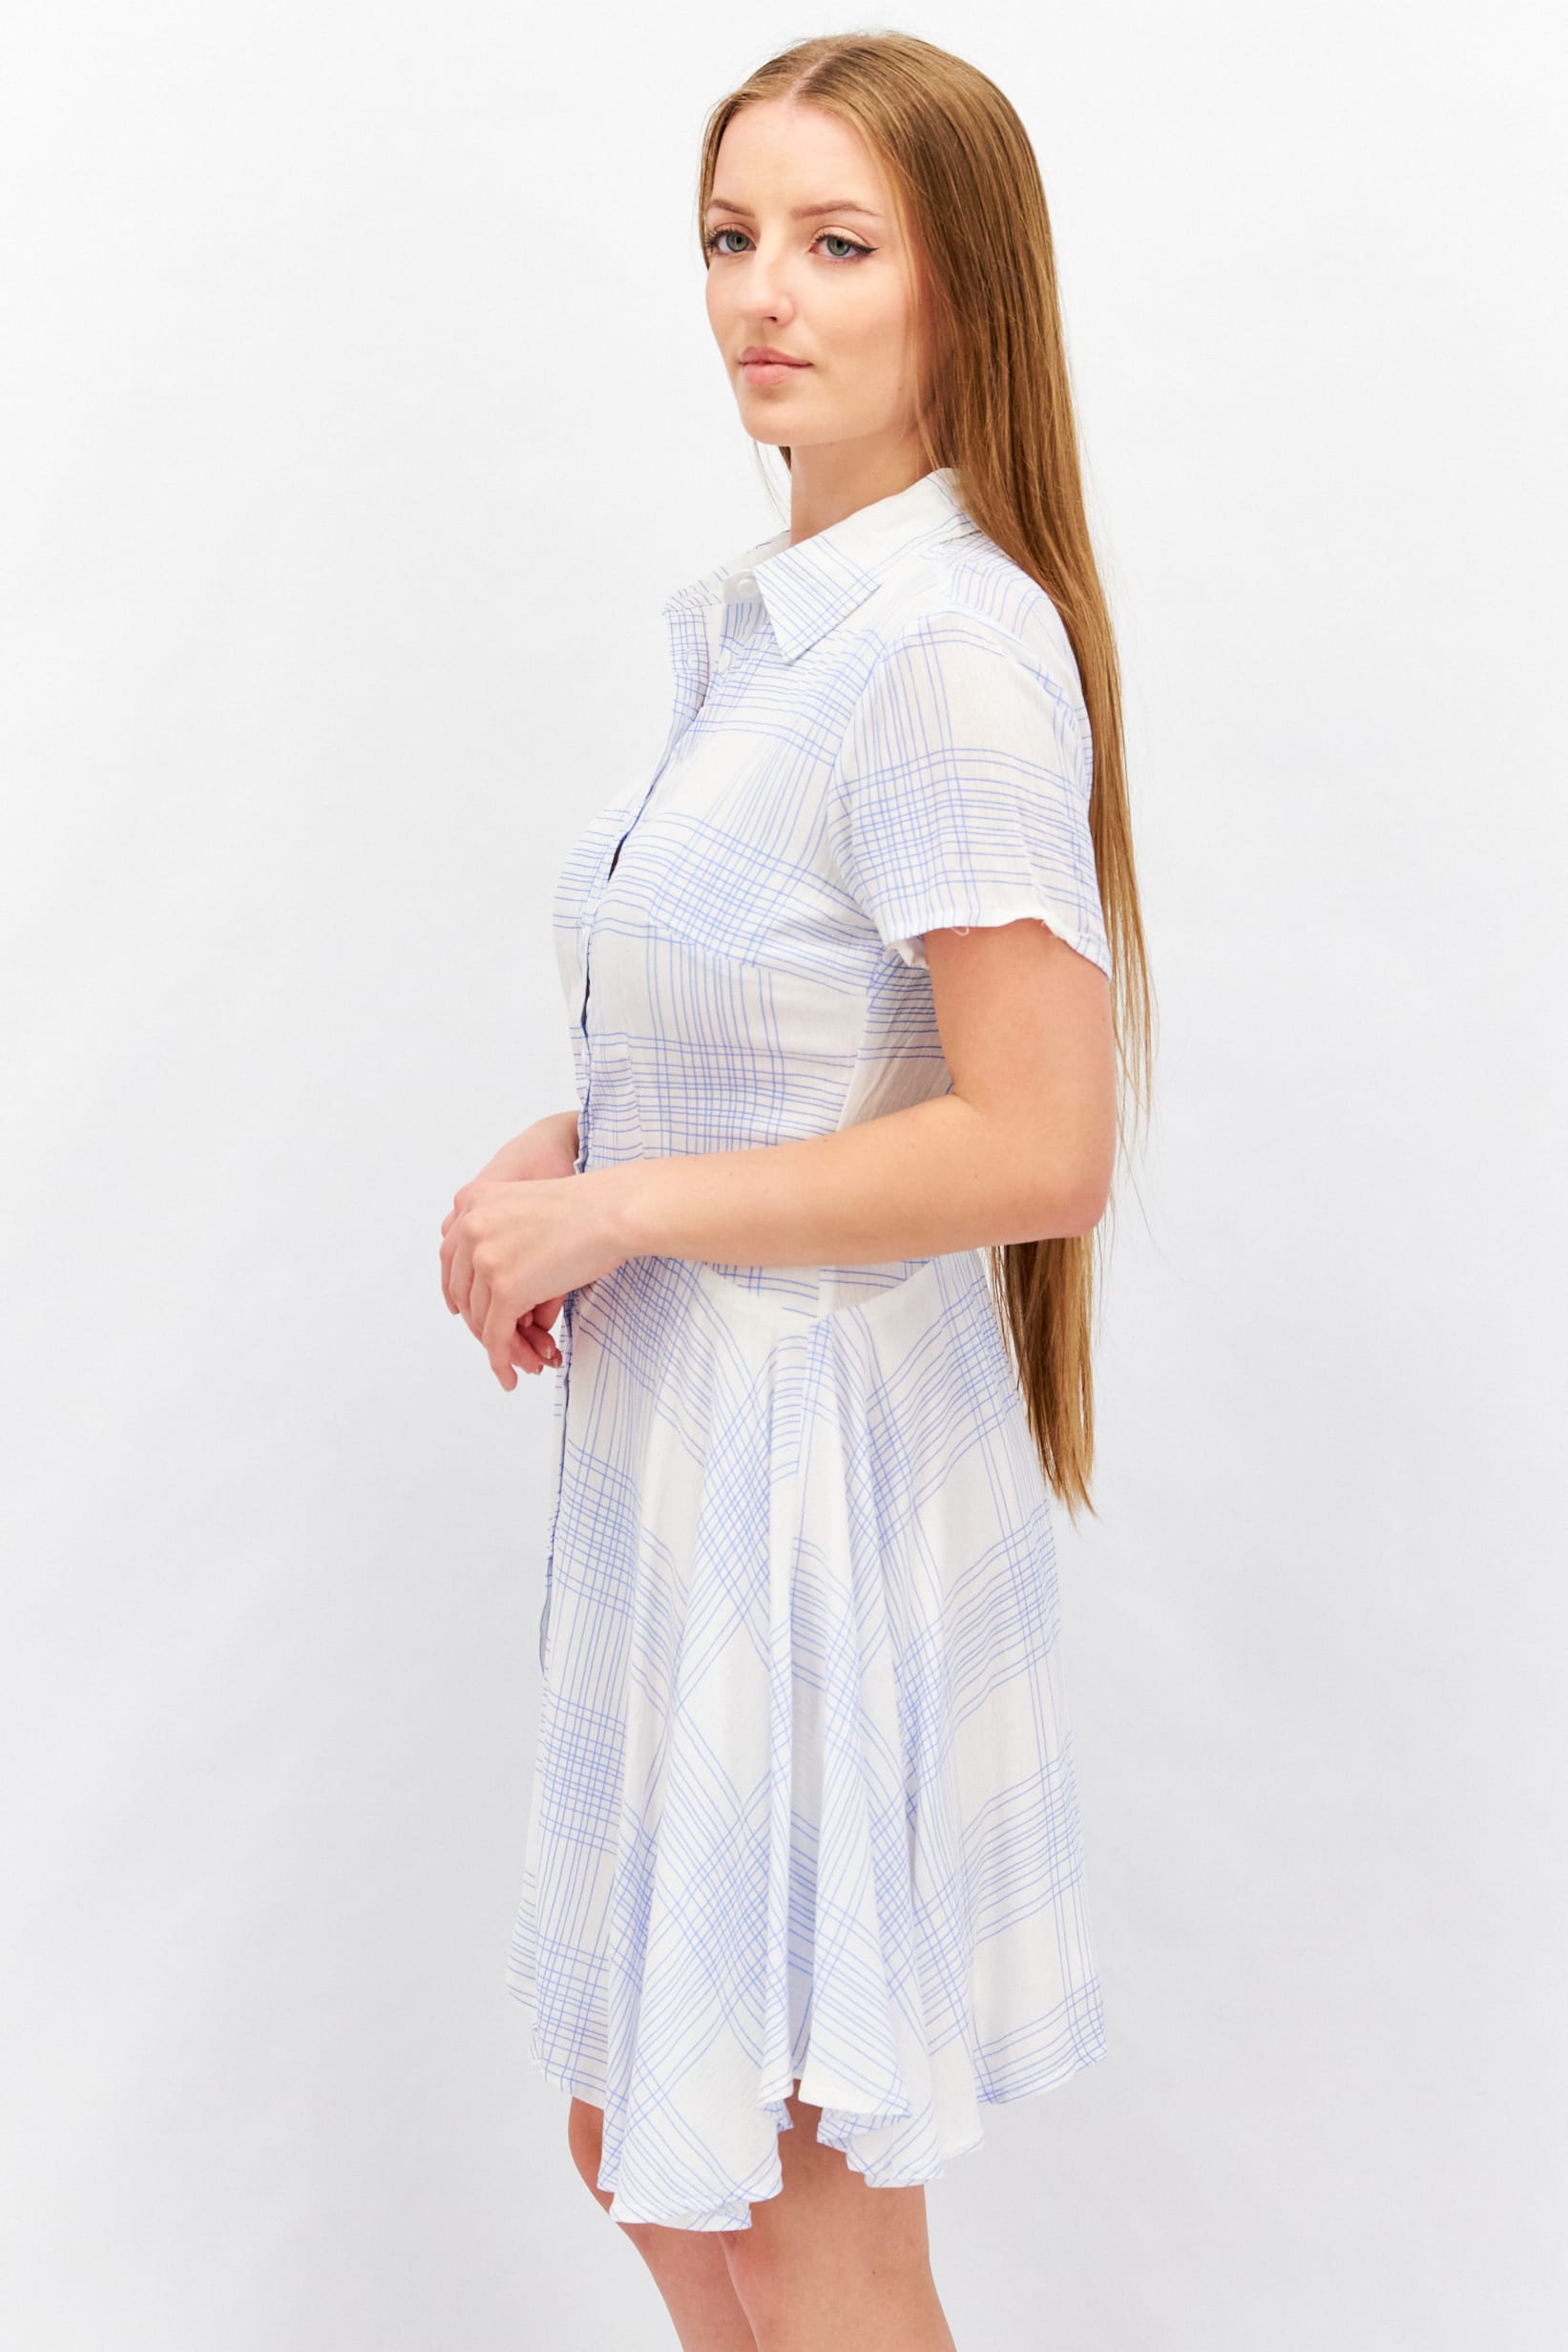 Missguided Women's White/Blue Shirt  Dress AMF1039